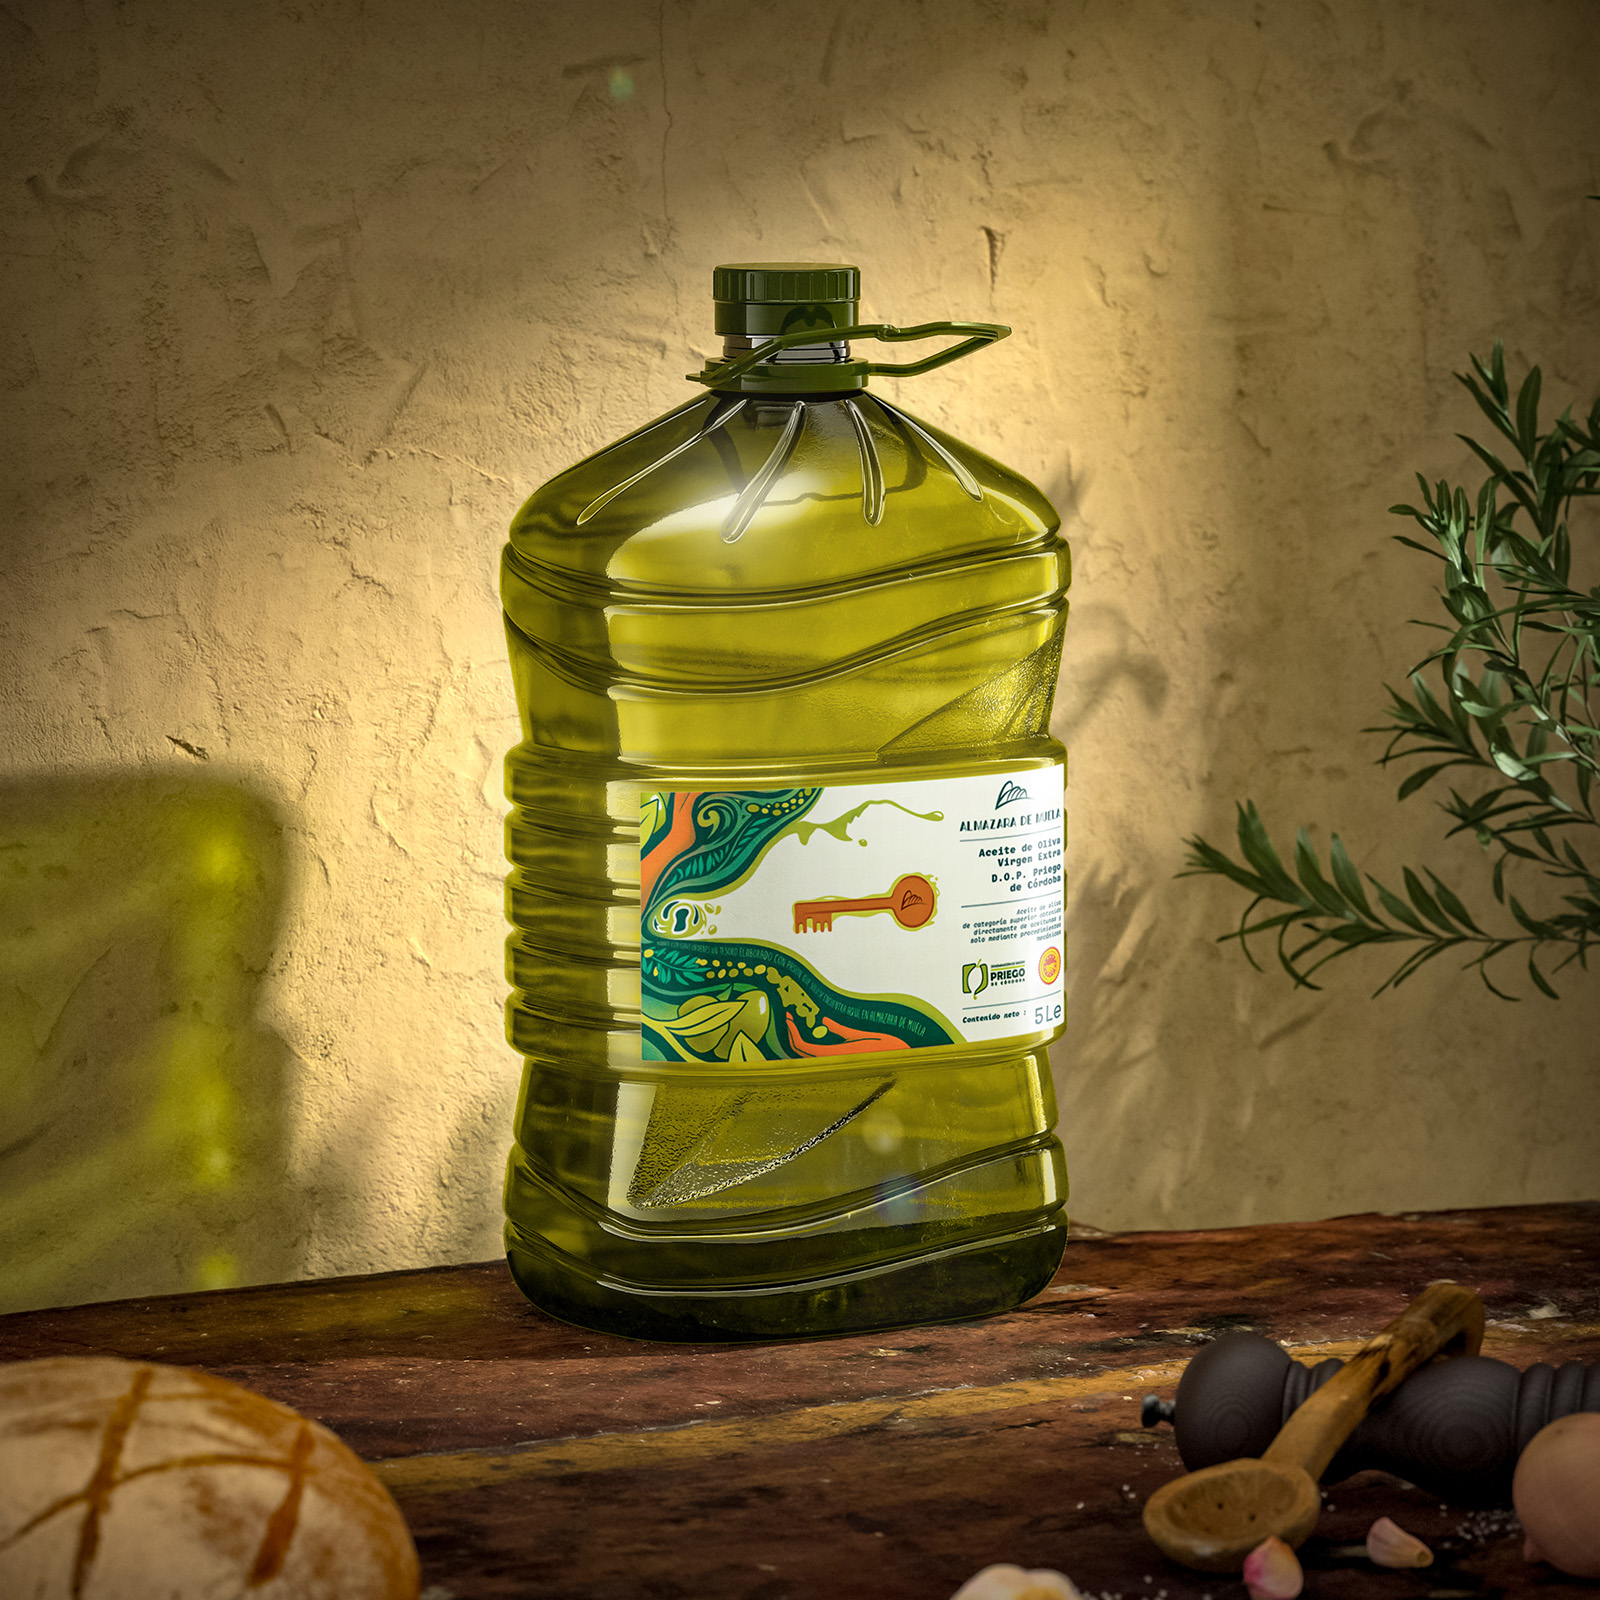 Product Branding and Packaging for Almazara de Muela, a Priego de Córdoba PDO Extra Virgin Olive Oil